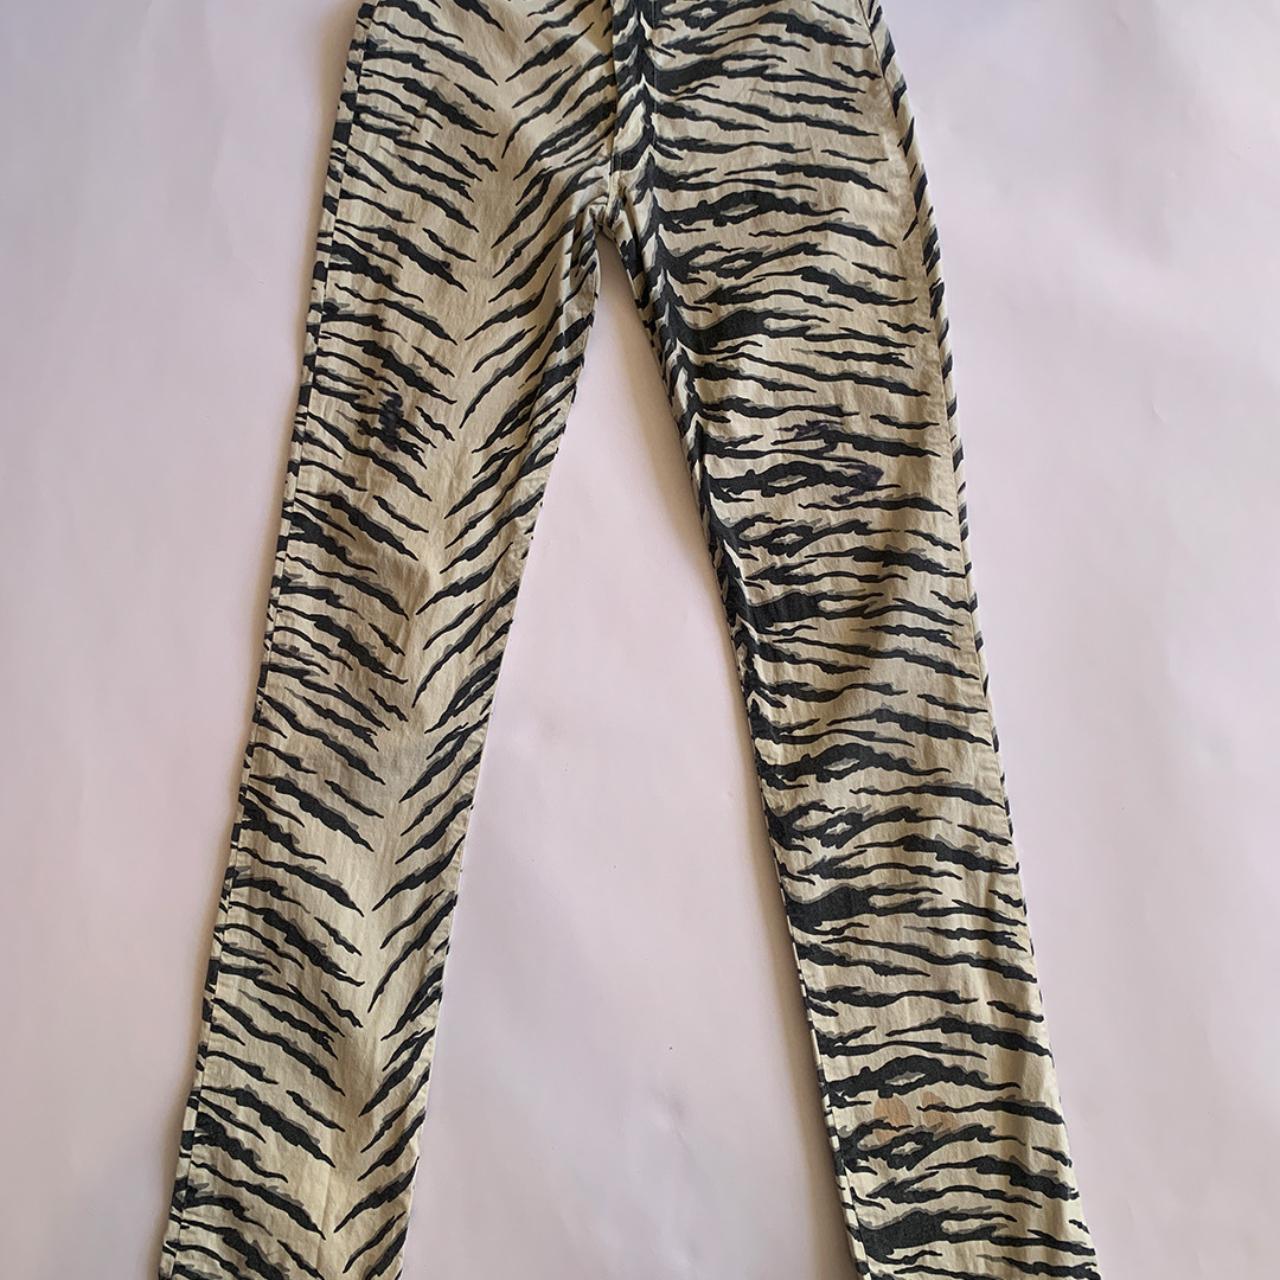 RARE Vintage 80s FIORUCCI Safety Jeans- Pink and Black- Zebra Print- Size  34EUR